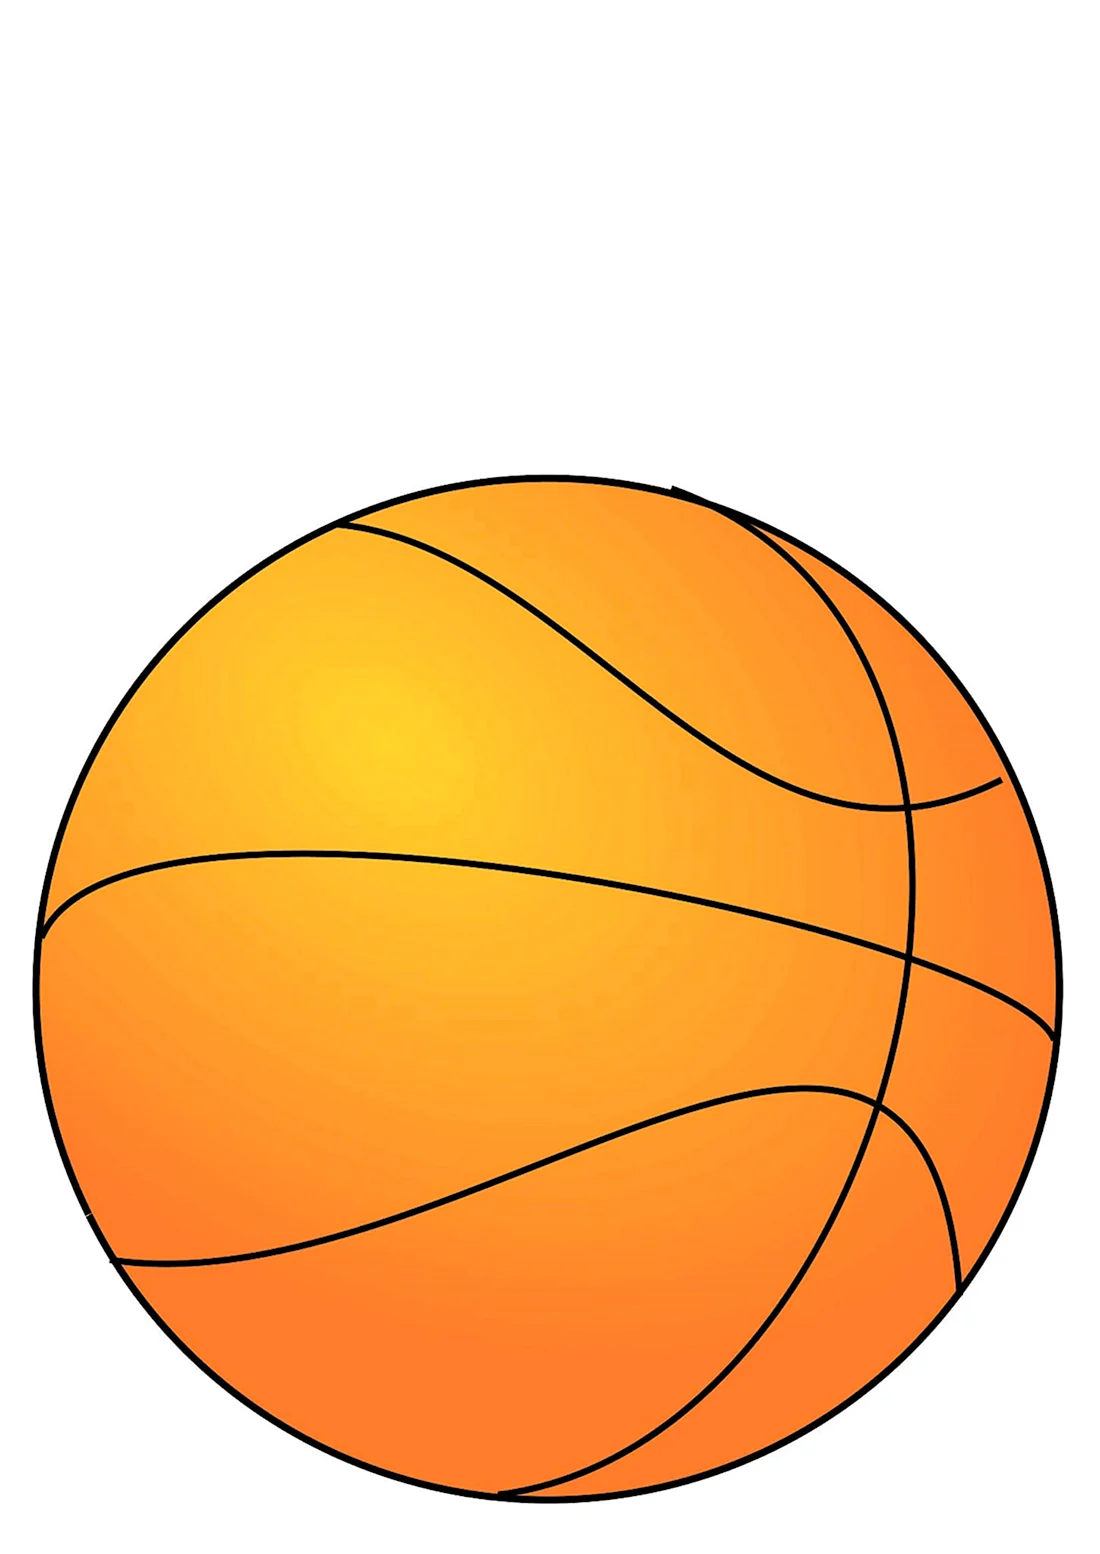 Мяч нарисованный на прозрачном фоне